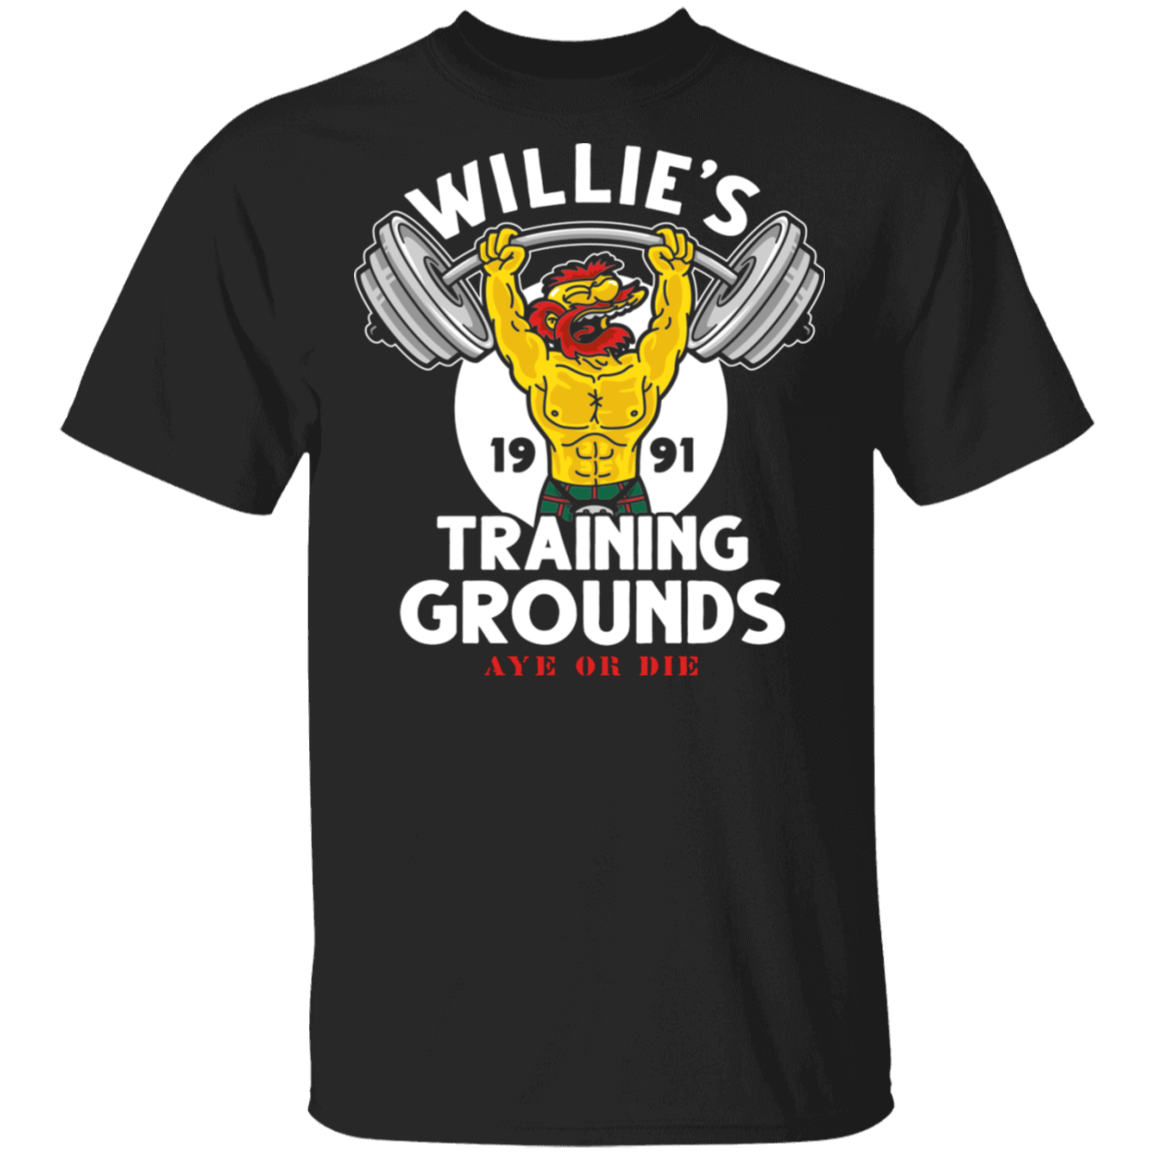 Willie's Training Grounds T-Shirt